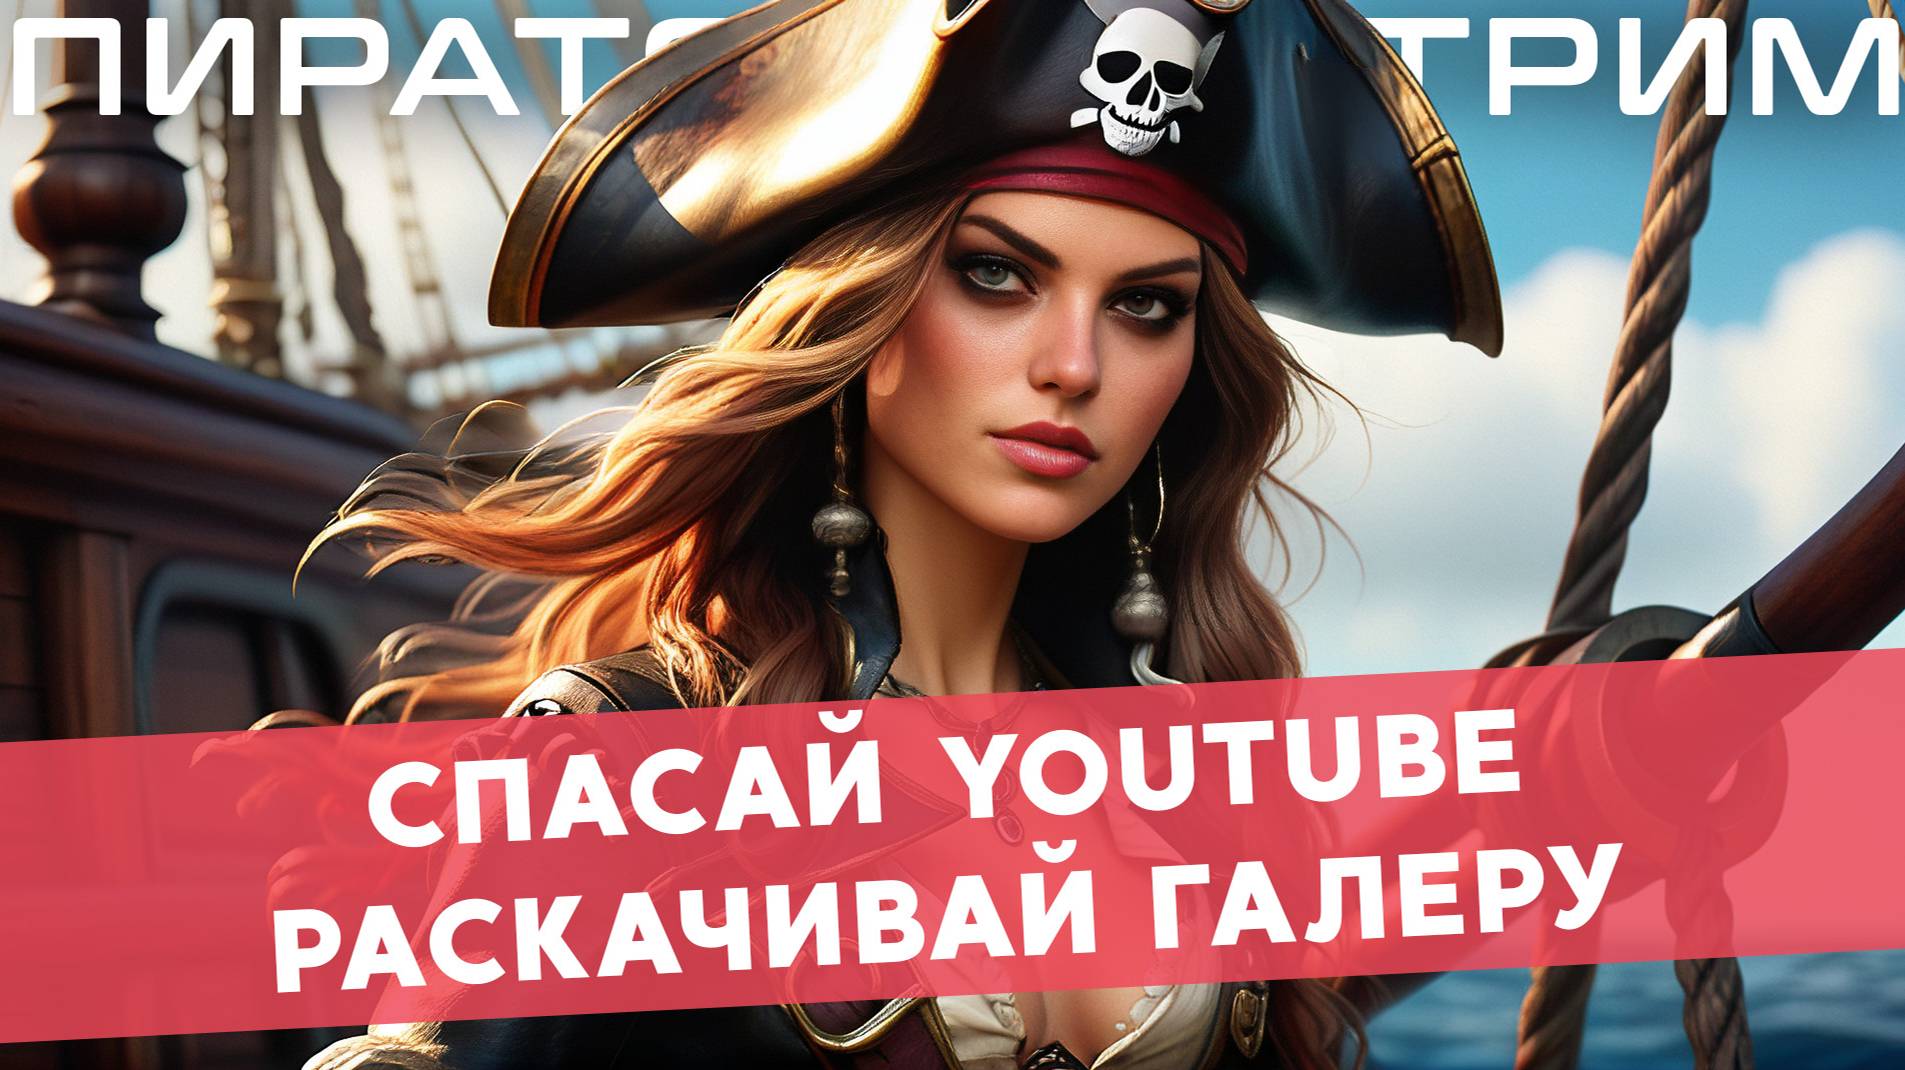 Спасаем YouTube, раскачиваем галеру — ПиратLive 18.07